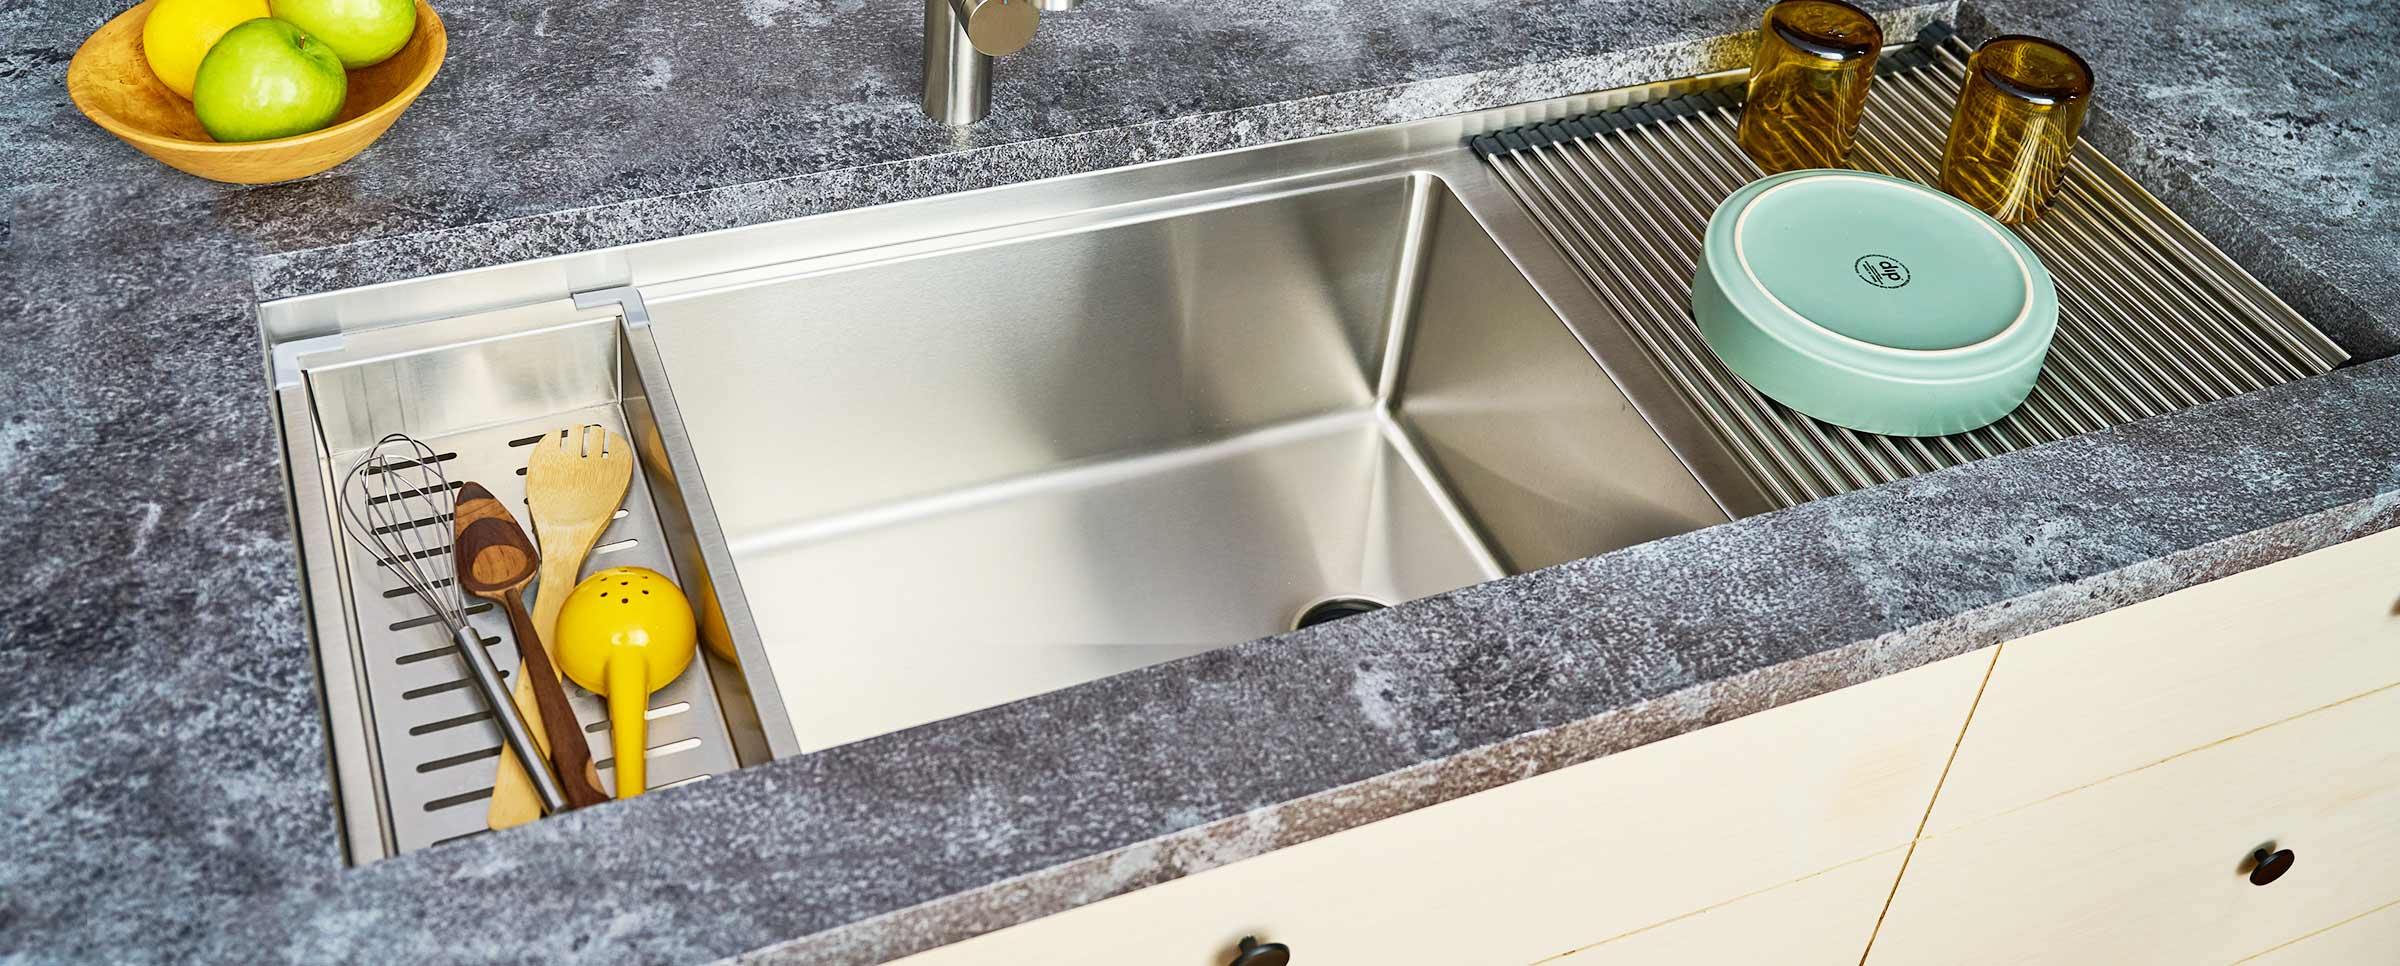 Large undermount stainless steel drainboard kitchen sink